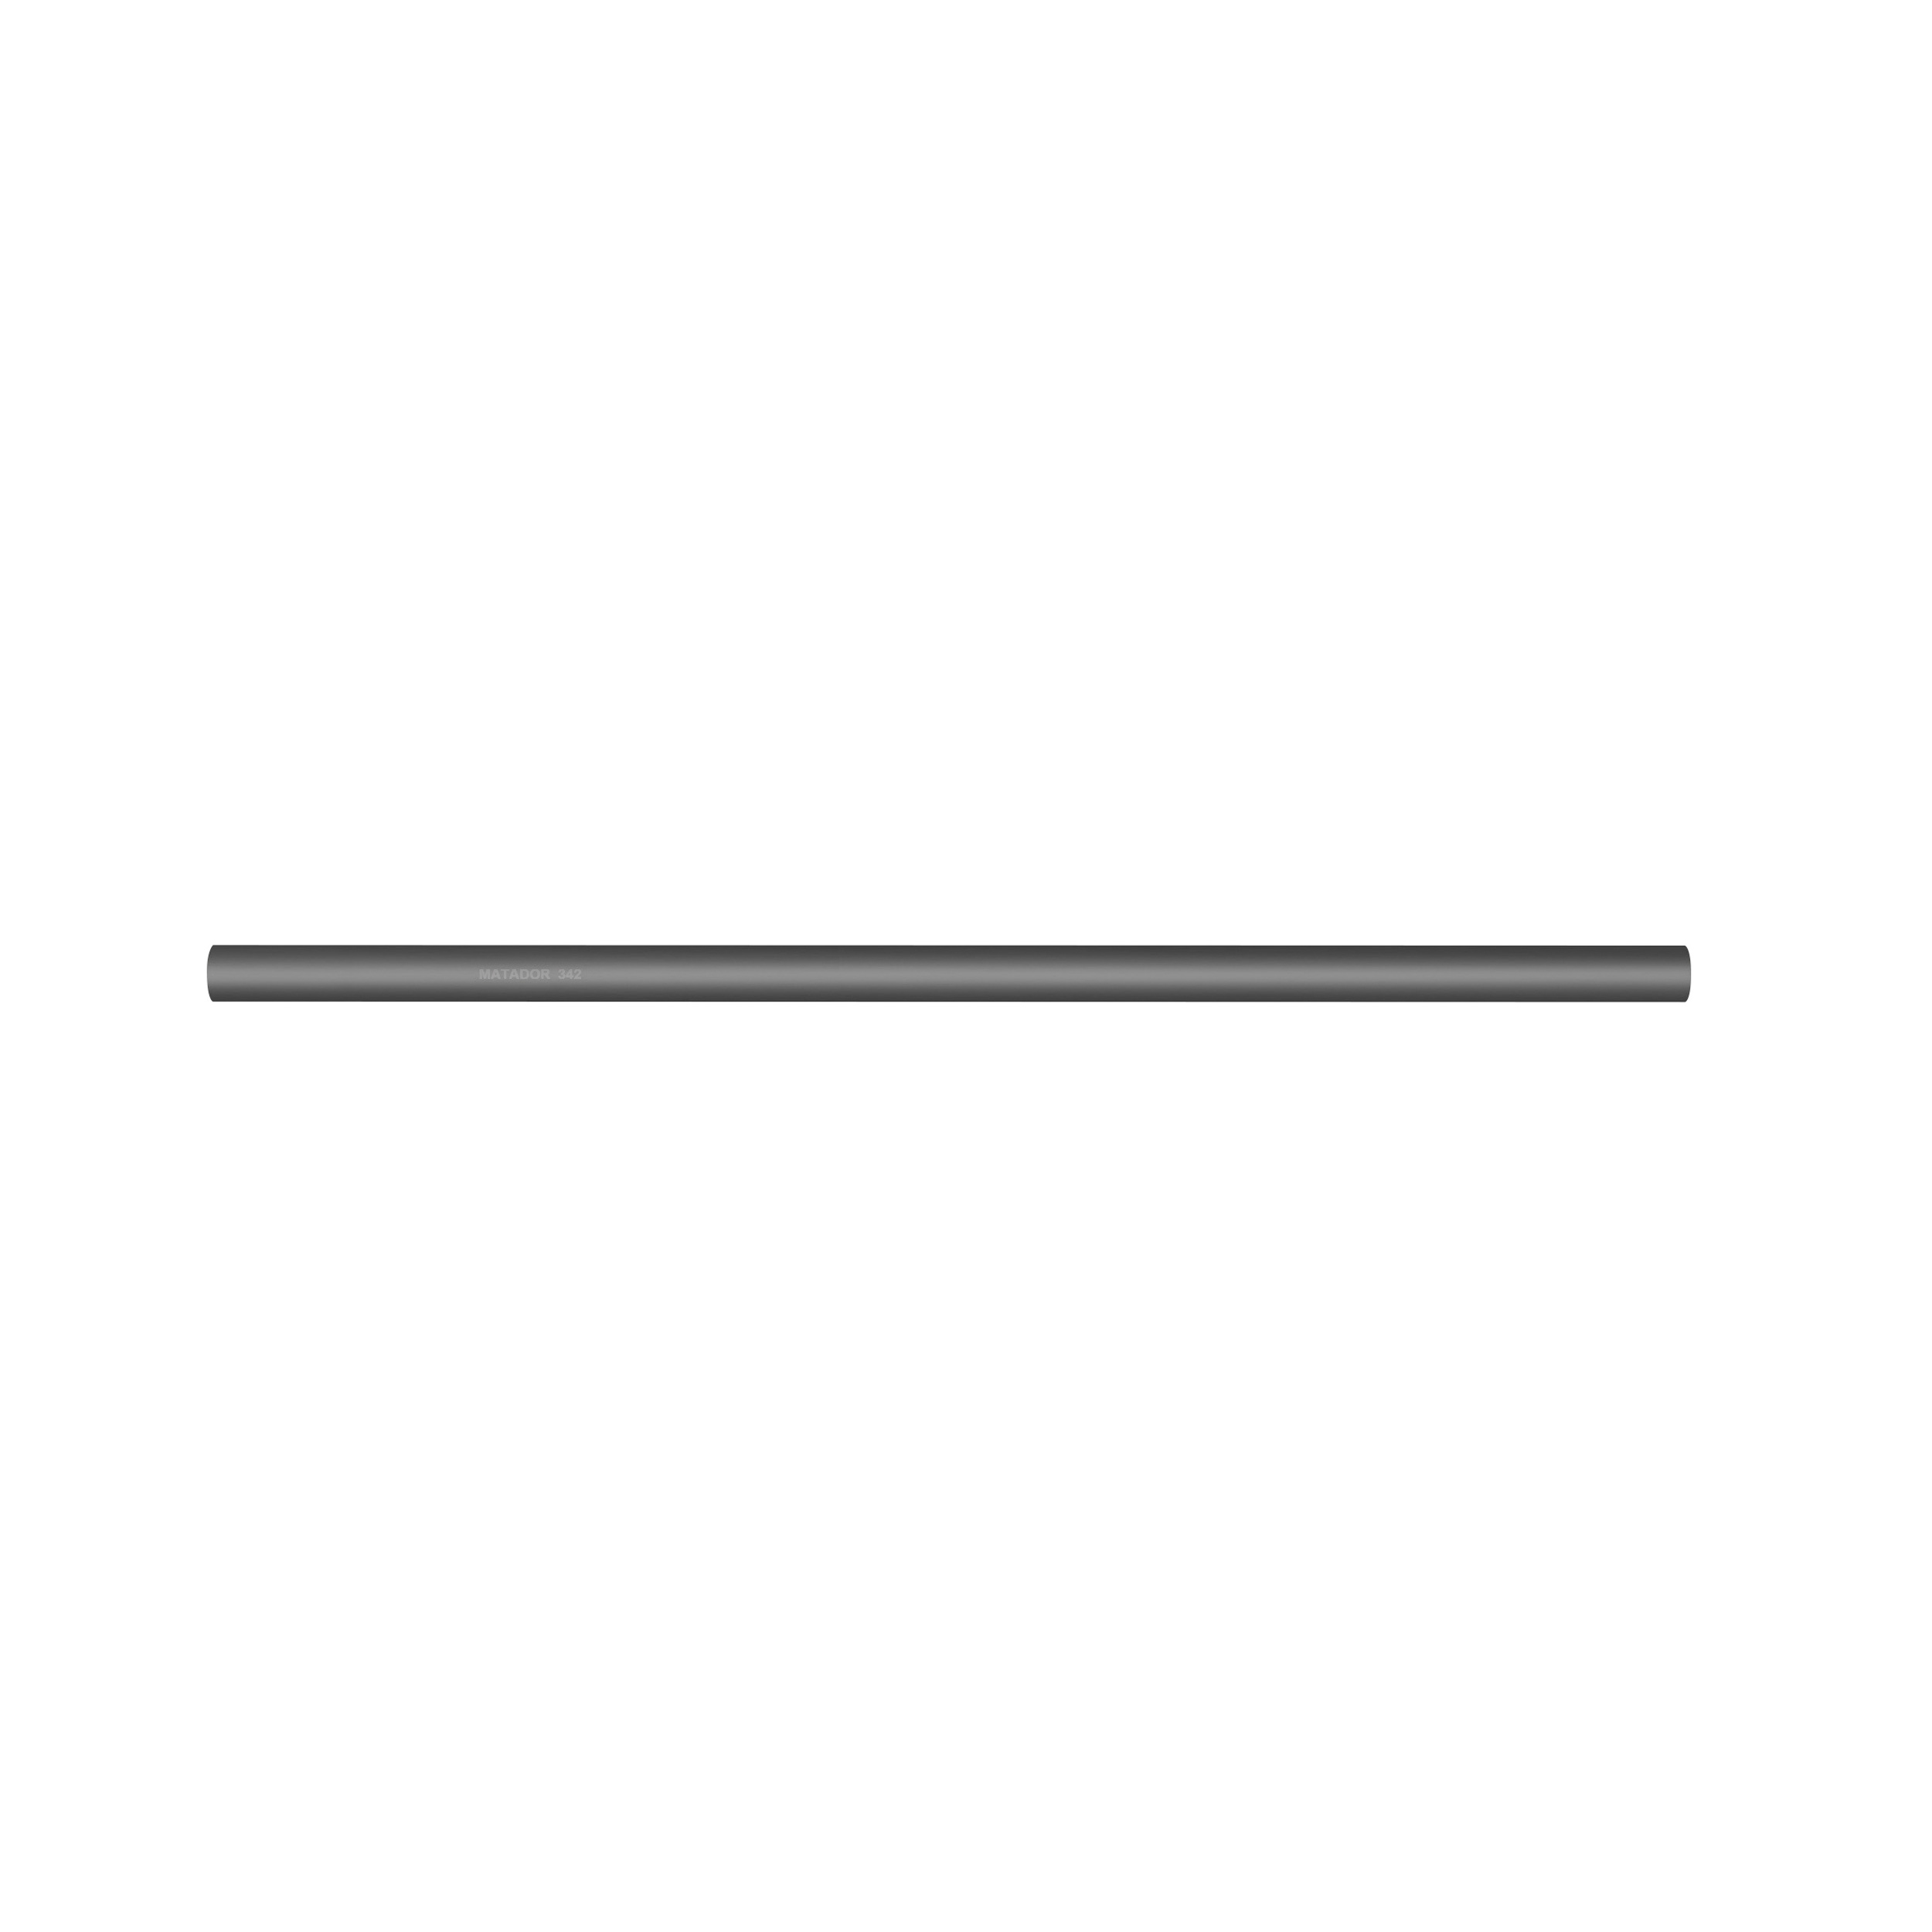 Drehstift für Radmuttern-Steckschlüssel, 18x600 mm, MATADOR Art.-Nr.: 03420600